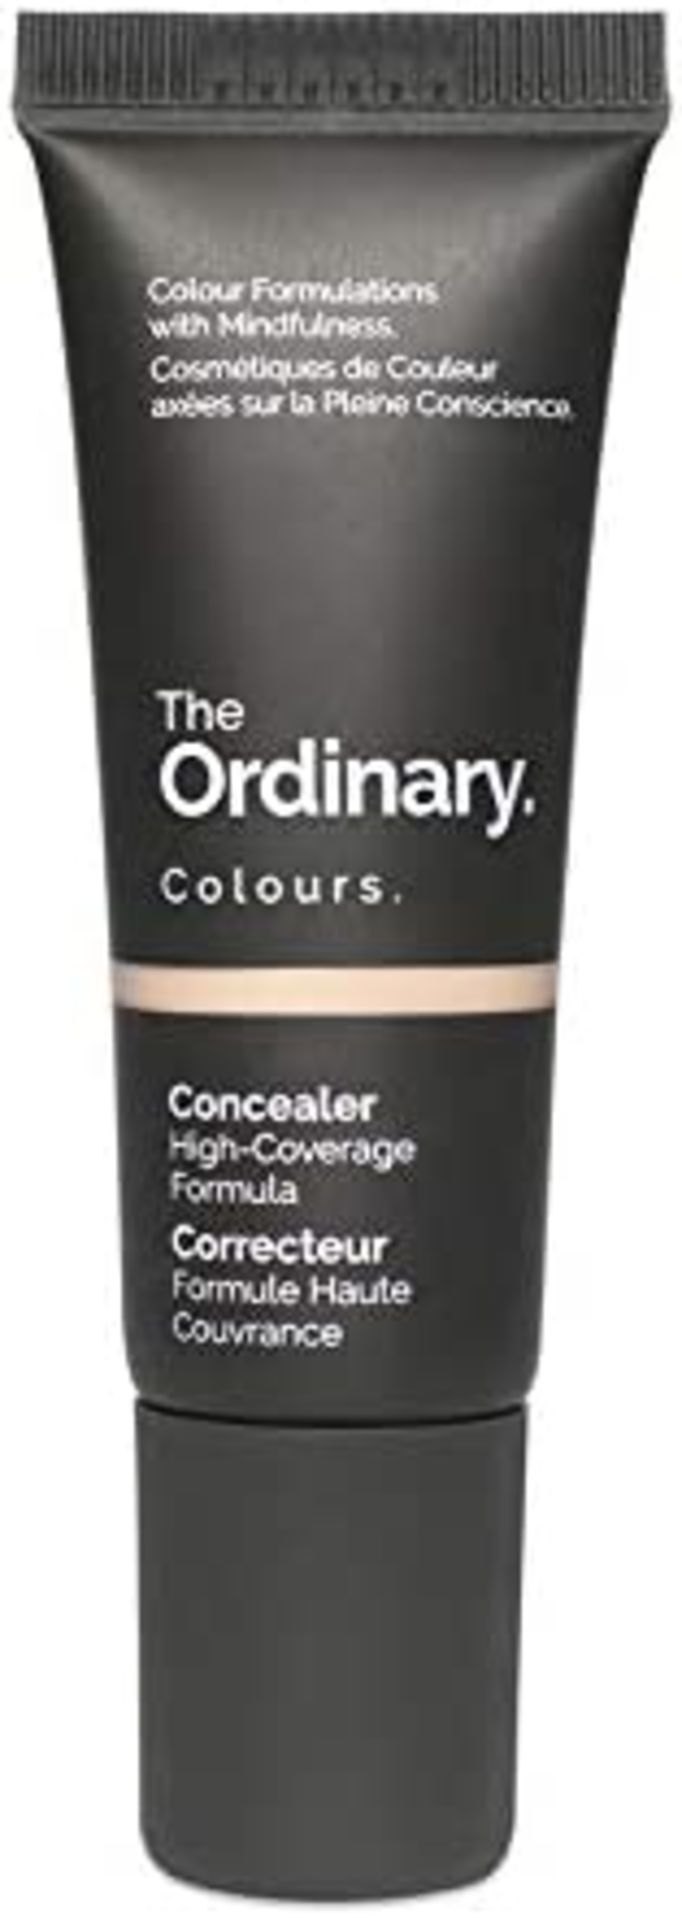 100 x The Ordinary Concealer 8ml Fair/Neutral RRP £5.98 ea